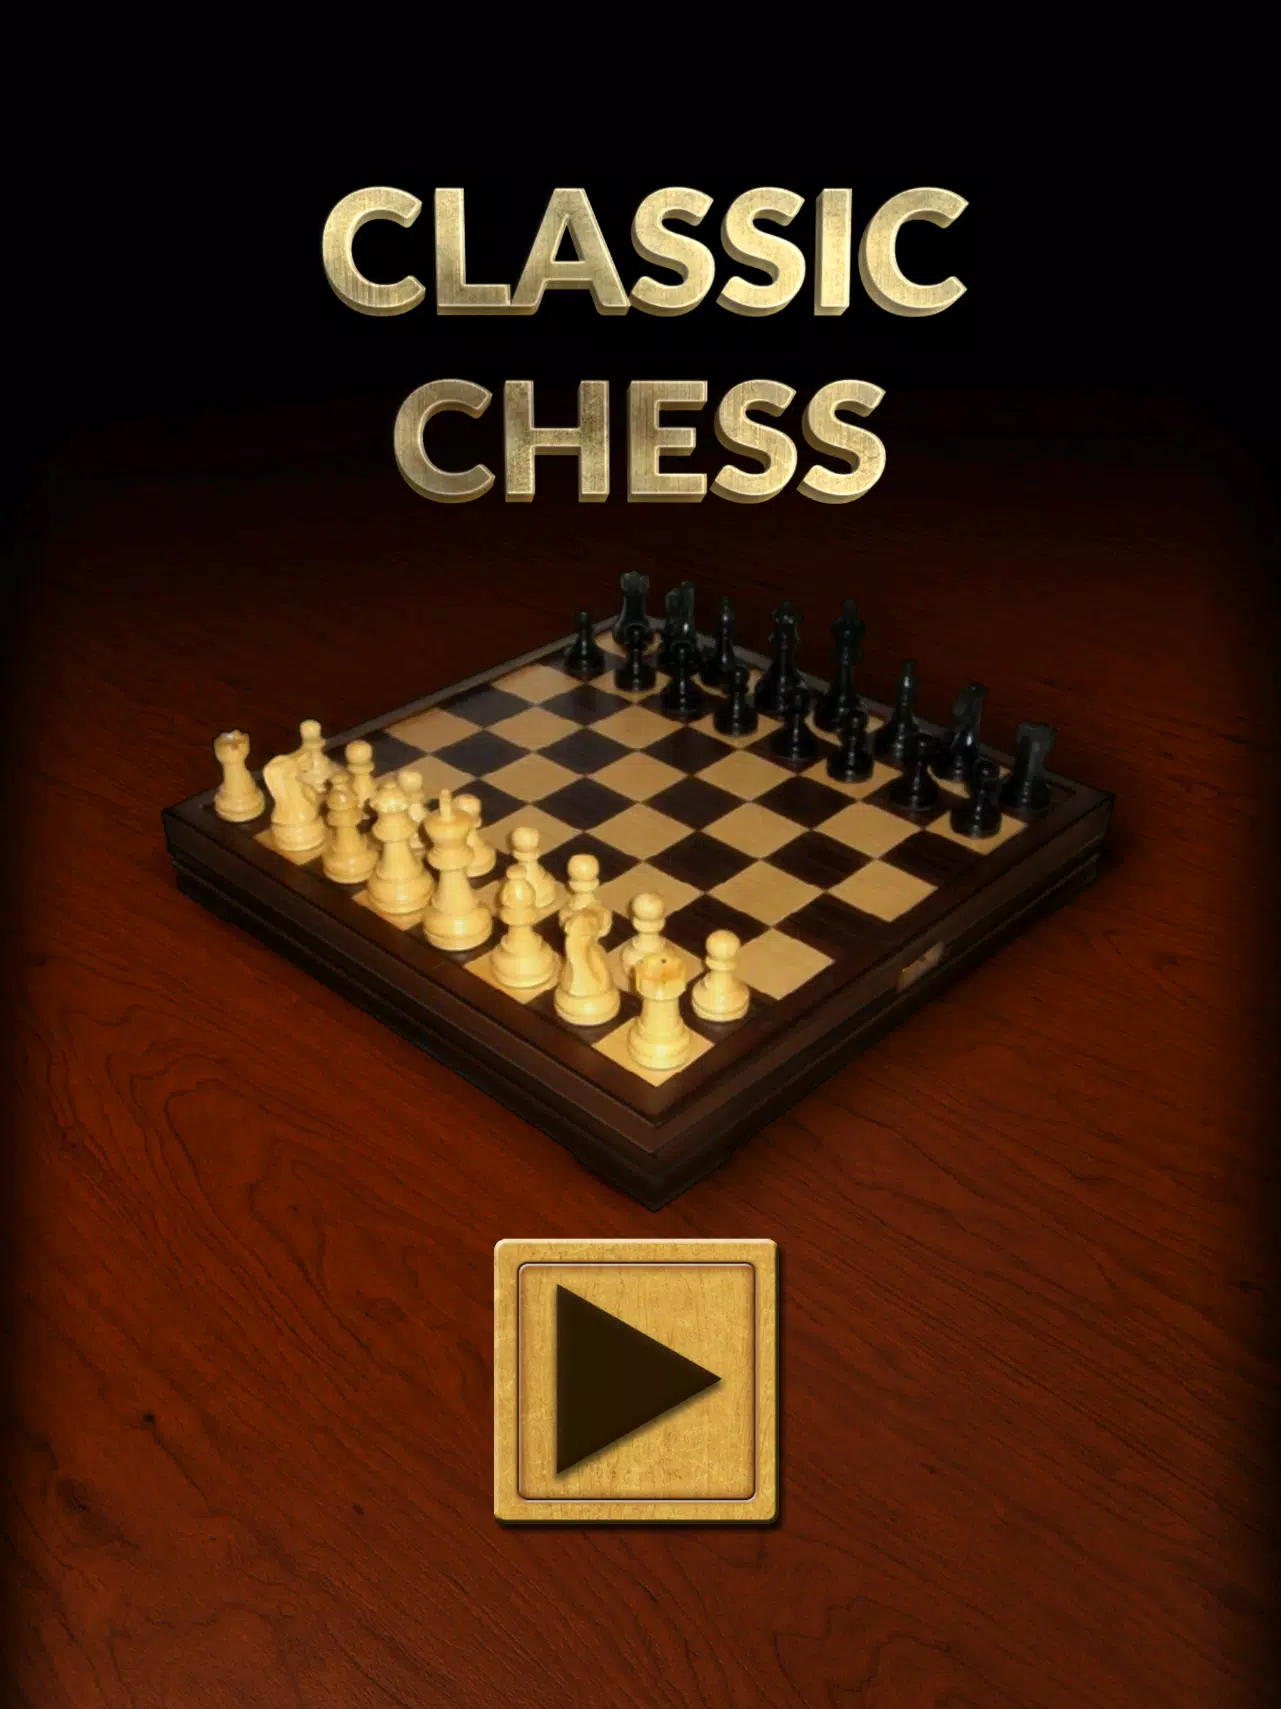 Chess Master King para Android - Baixe o APK na Uptodown